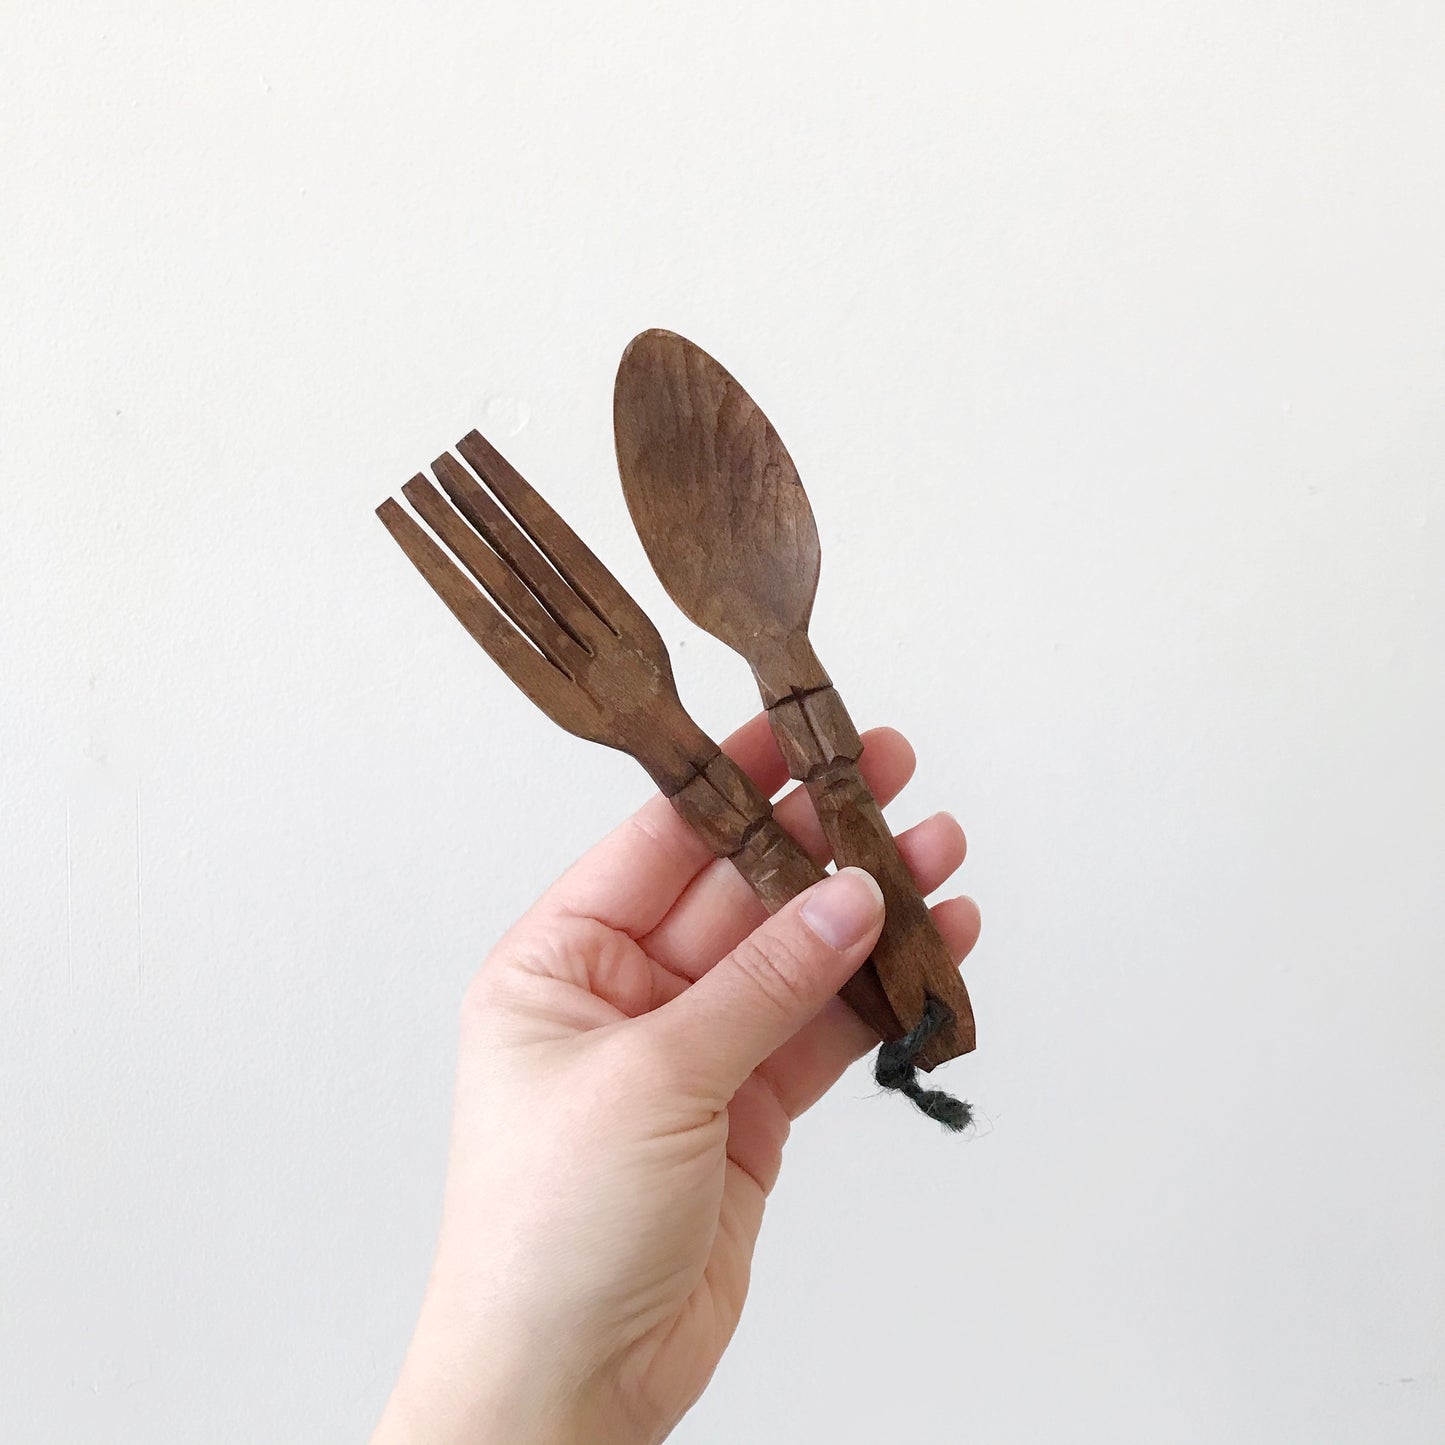 Carved Wood Fork + Spoon Set